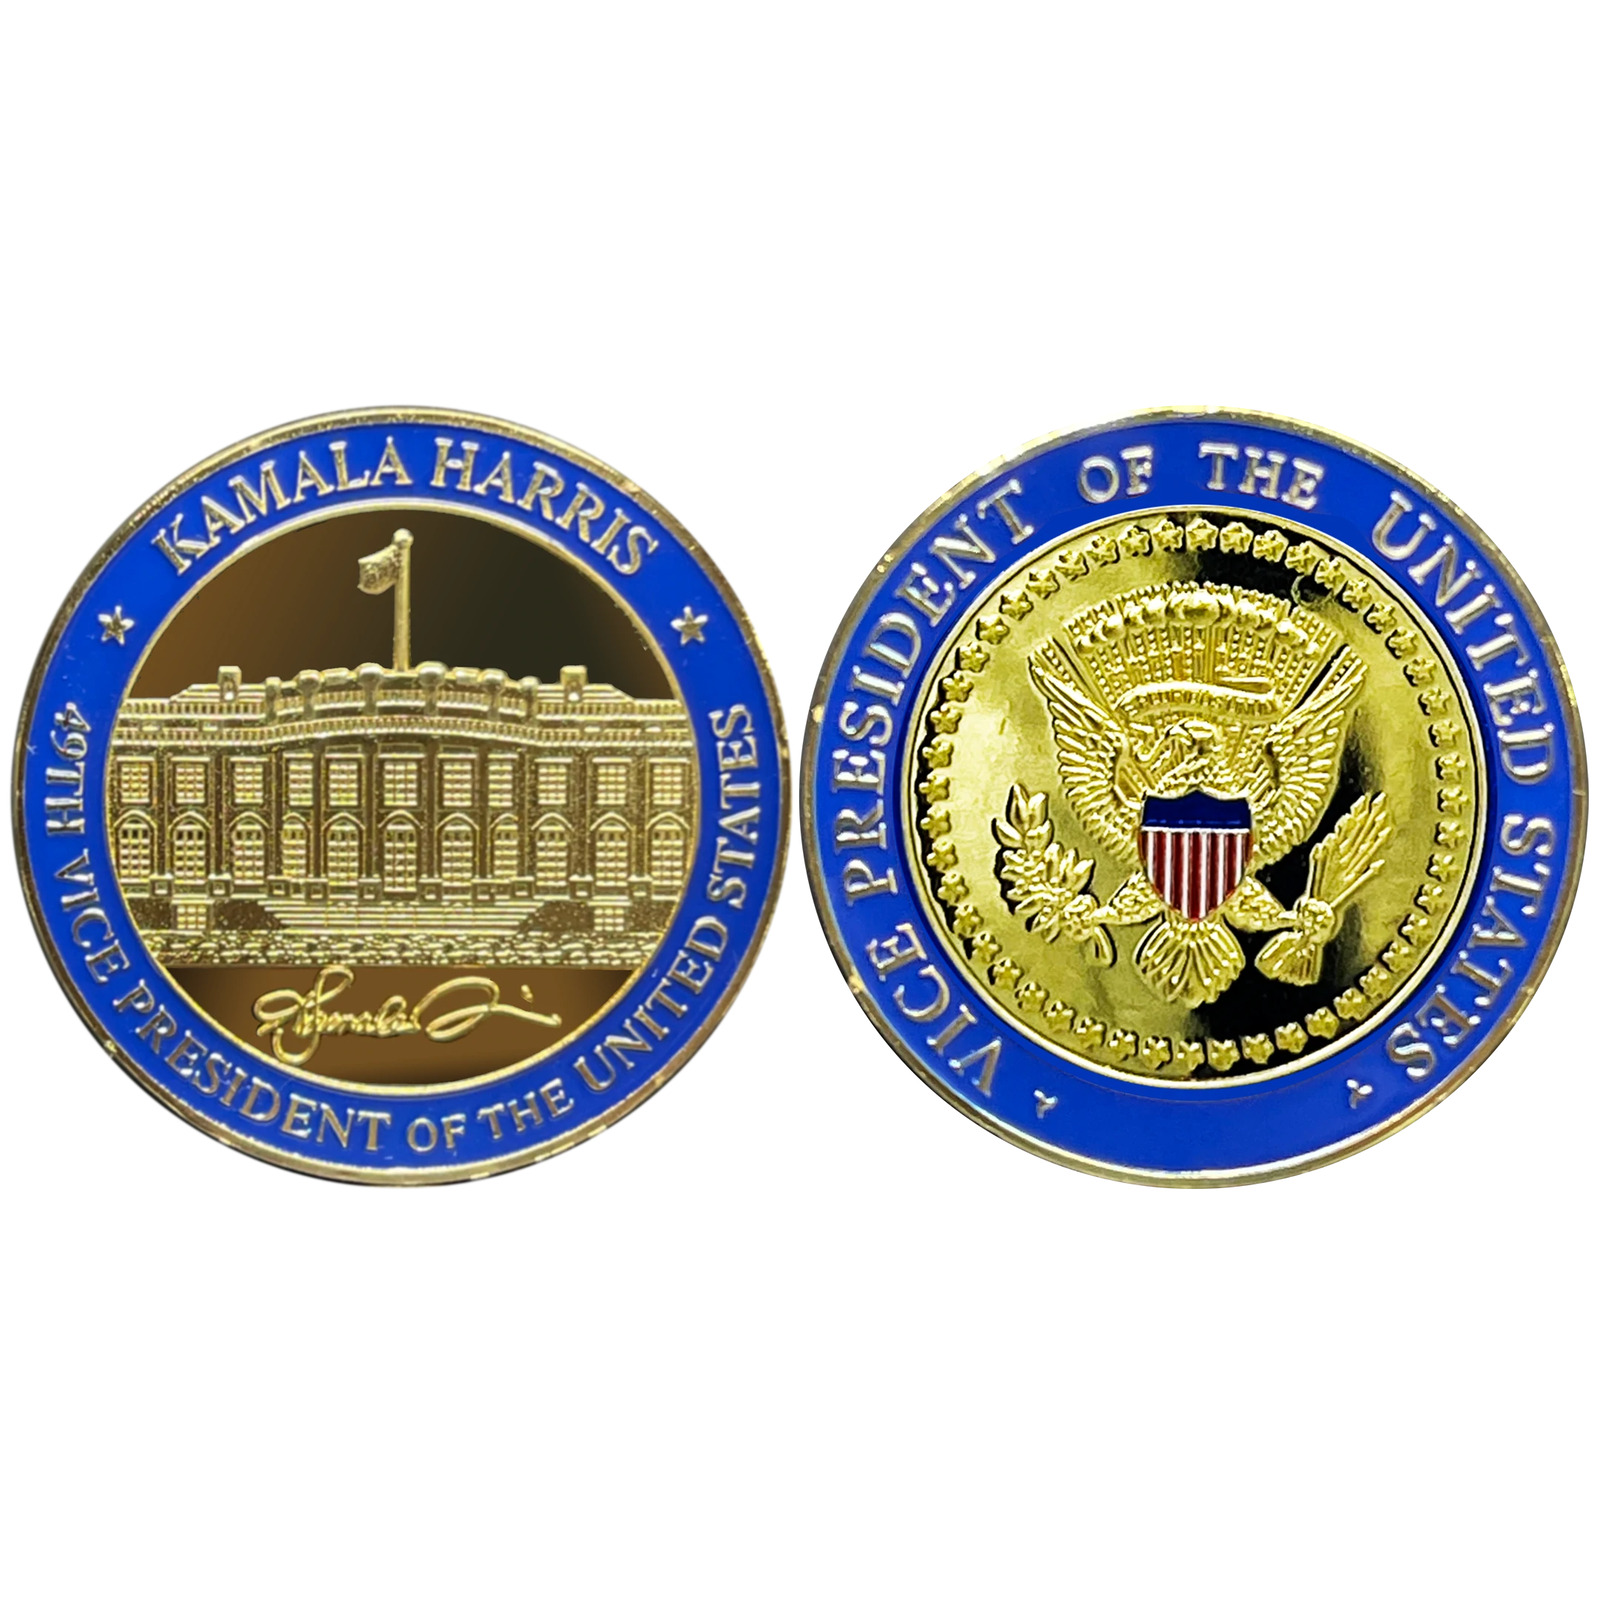 BL15-006 Vice President Kamala Harris White House Challenge Coin